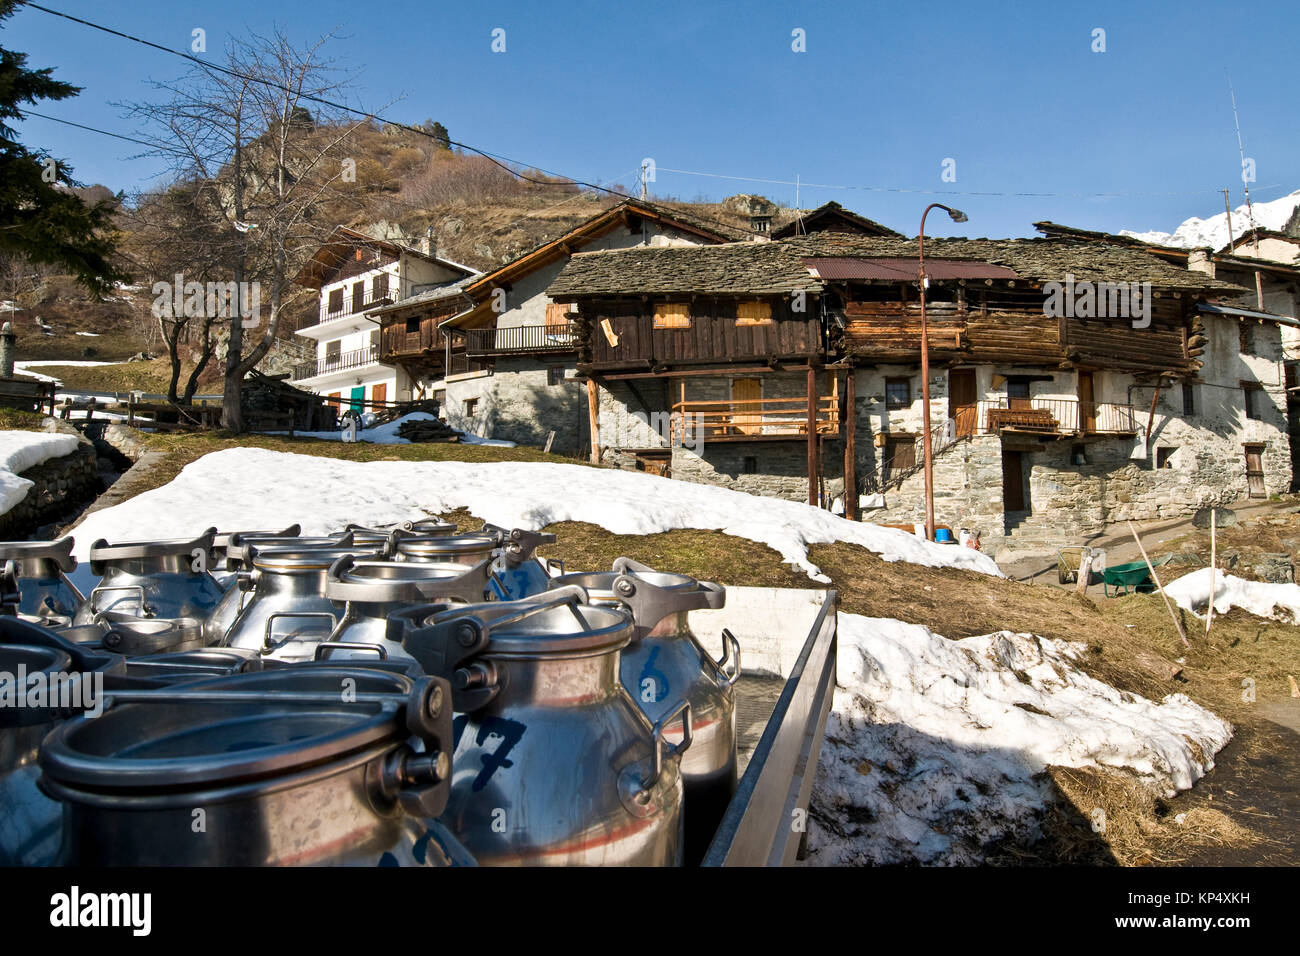 Graines, Valle d'Aosta, Italia Foto stock - Alamy